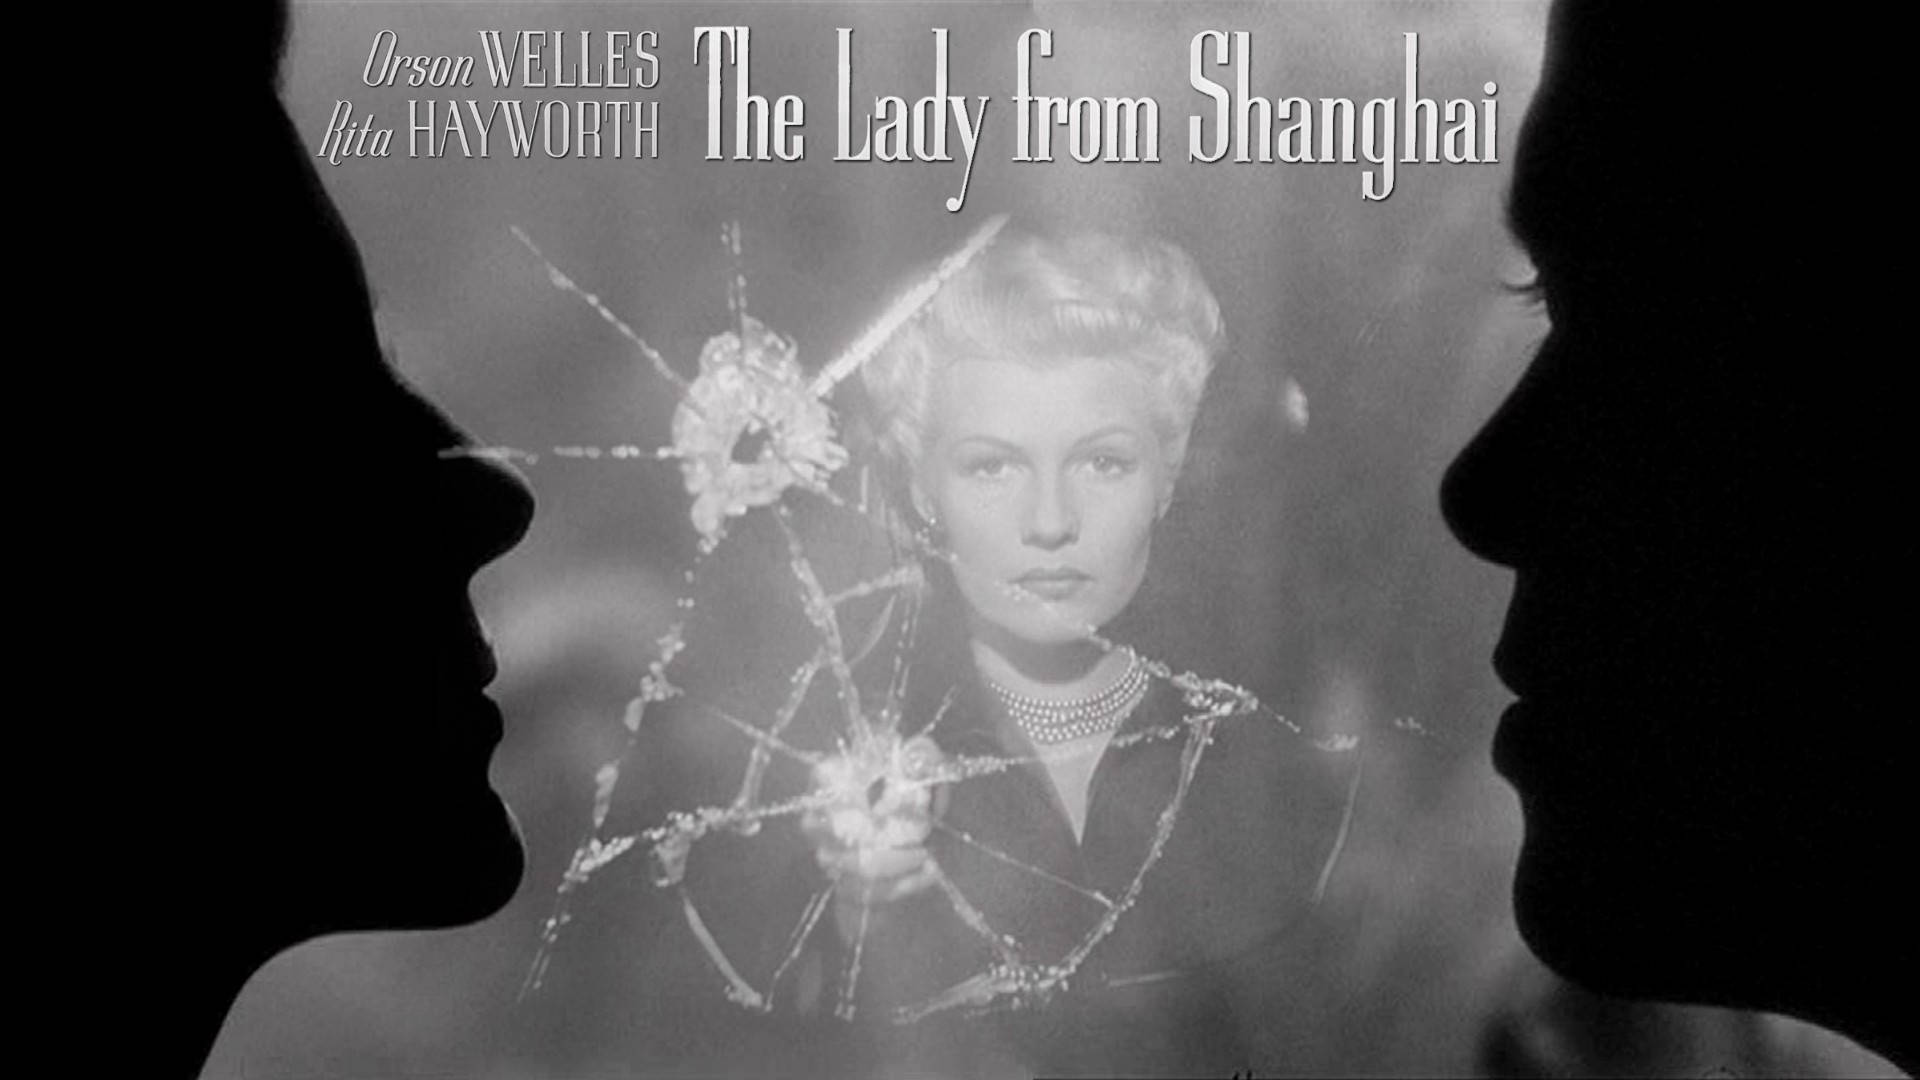 Ritahayworth The Lady From Shanghai: Rita Hayworth, Lady From Shanghai. Wallpaper